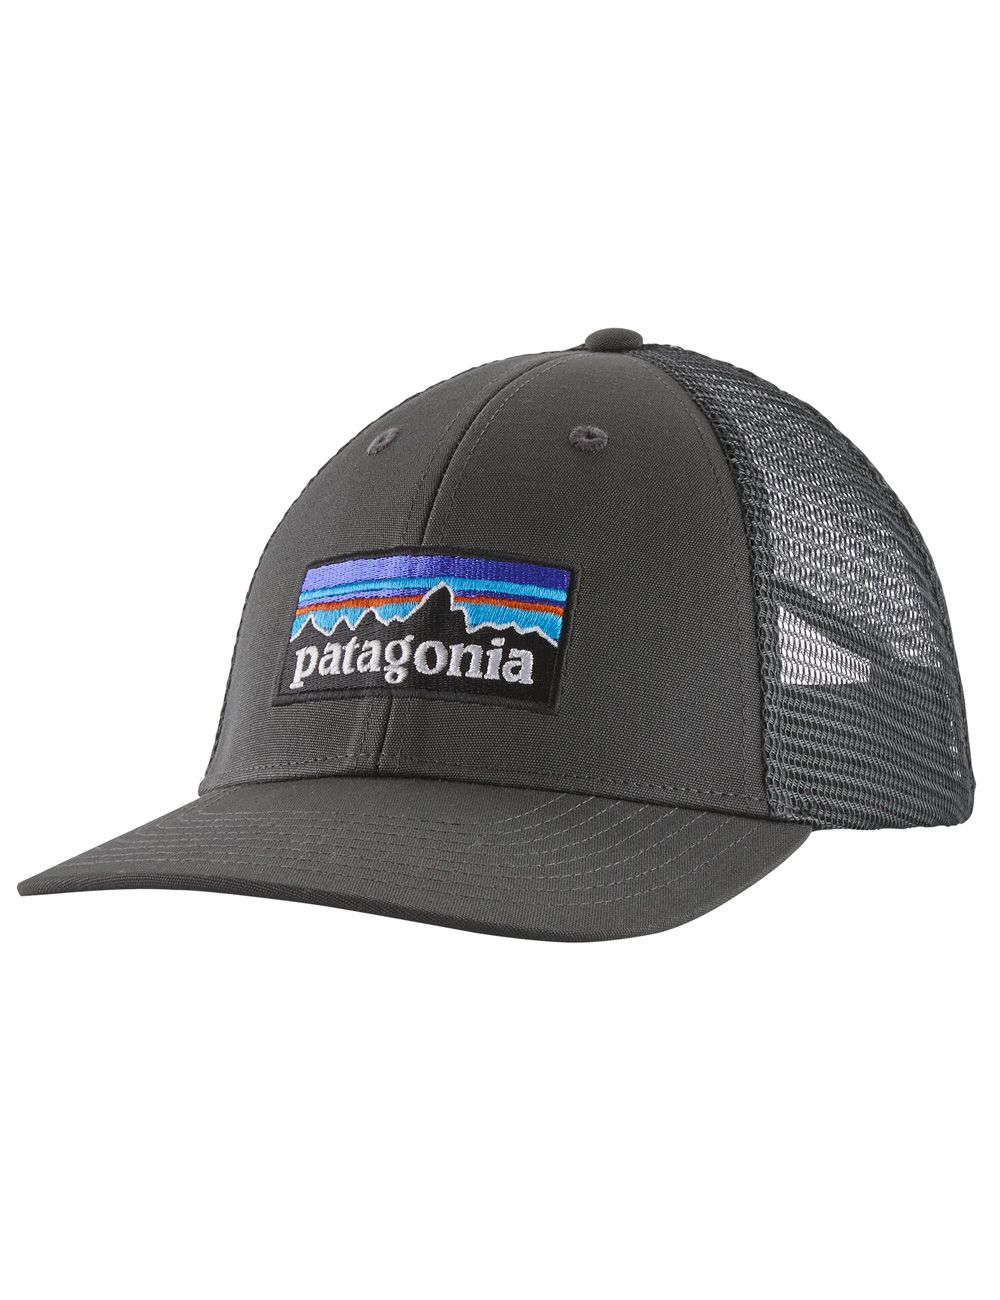 Patagonia P-6 LOGO TRUCKER HAT forge grey